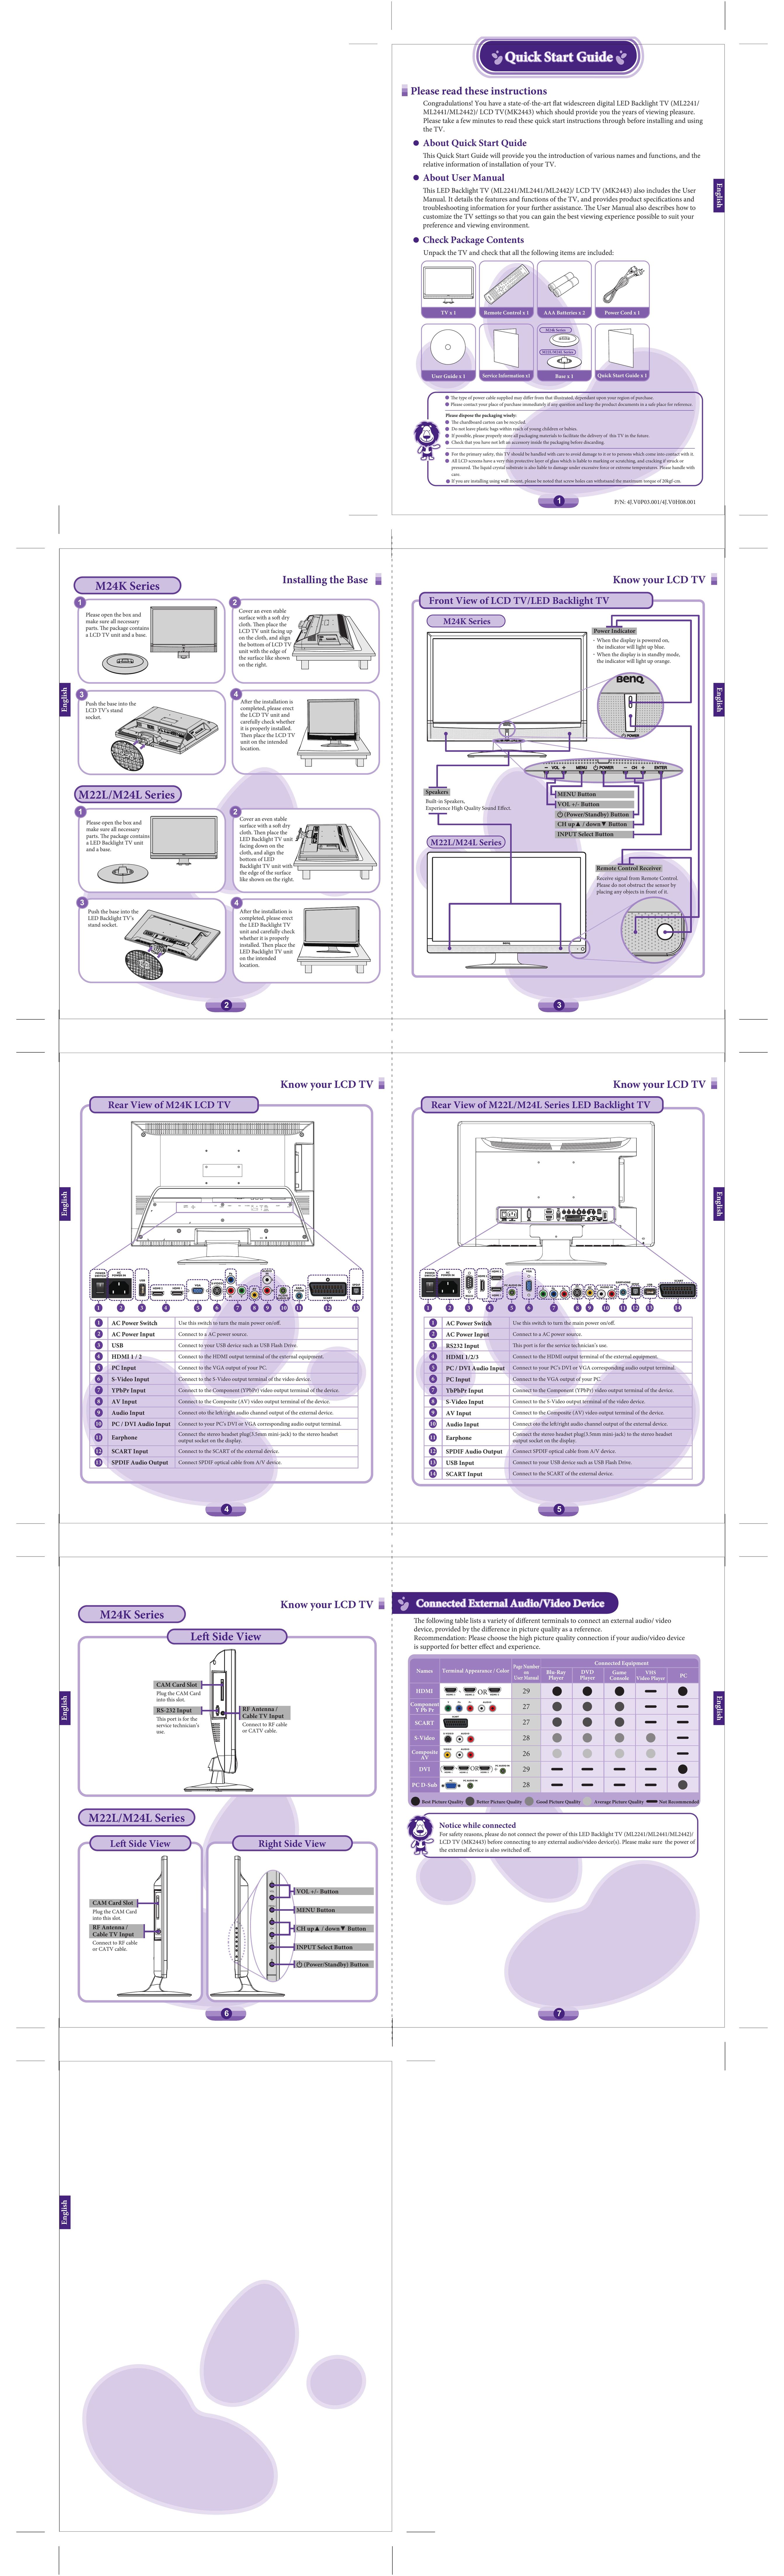 BenQ ML2241 Flat Panel Television User Manual